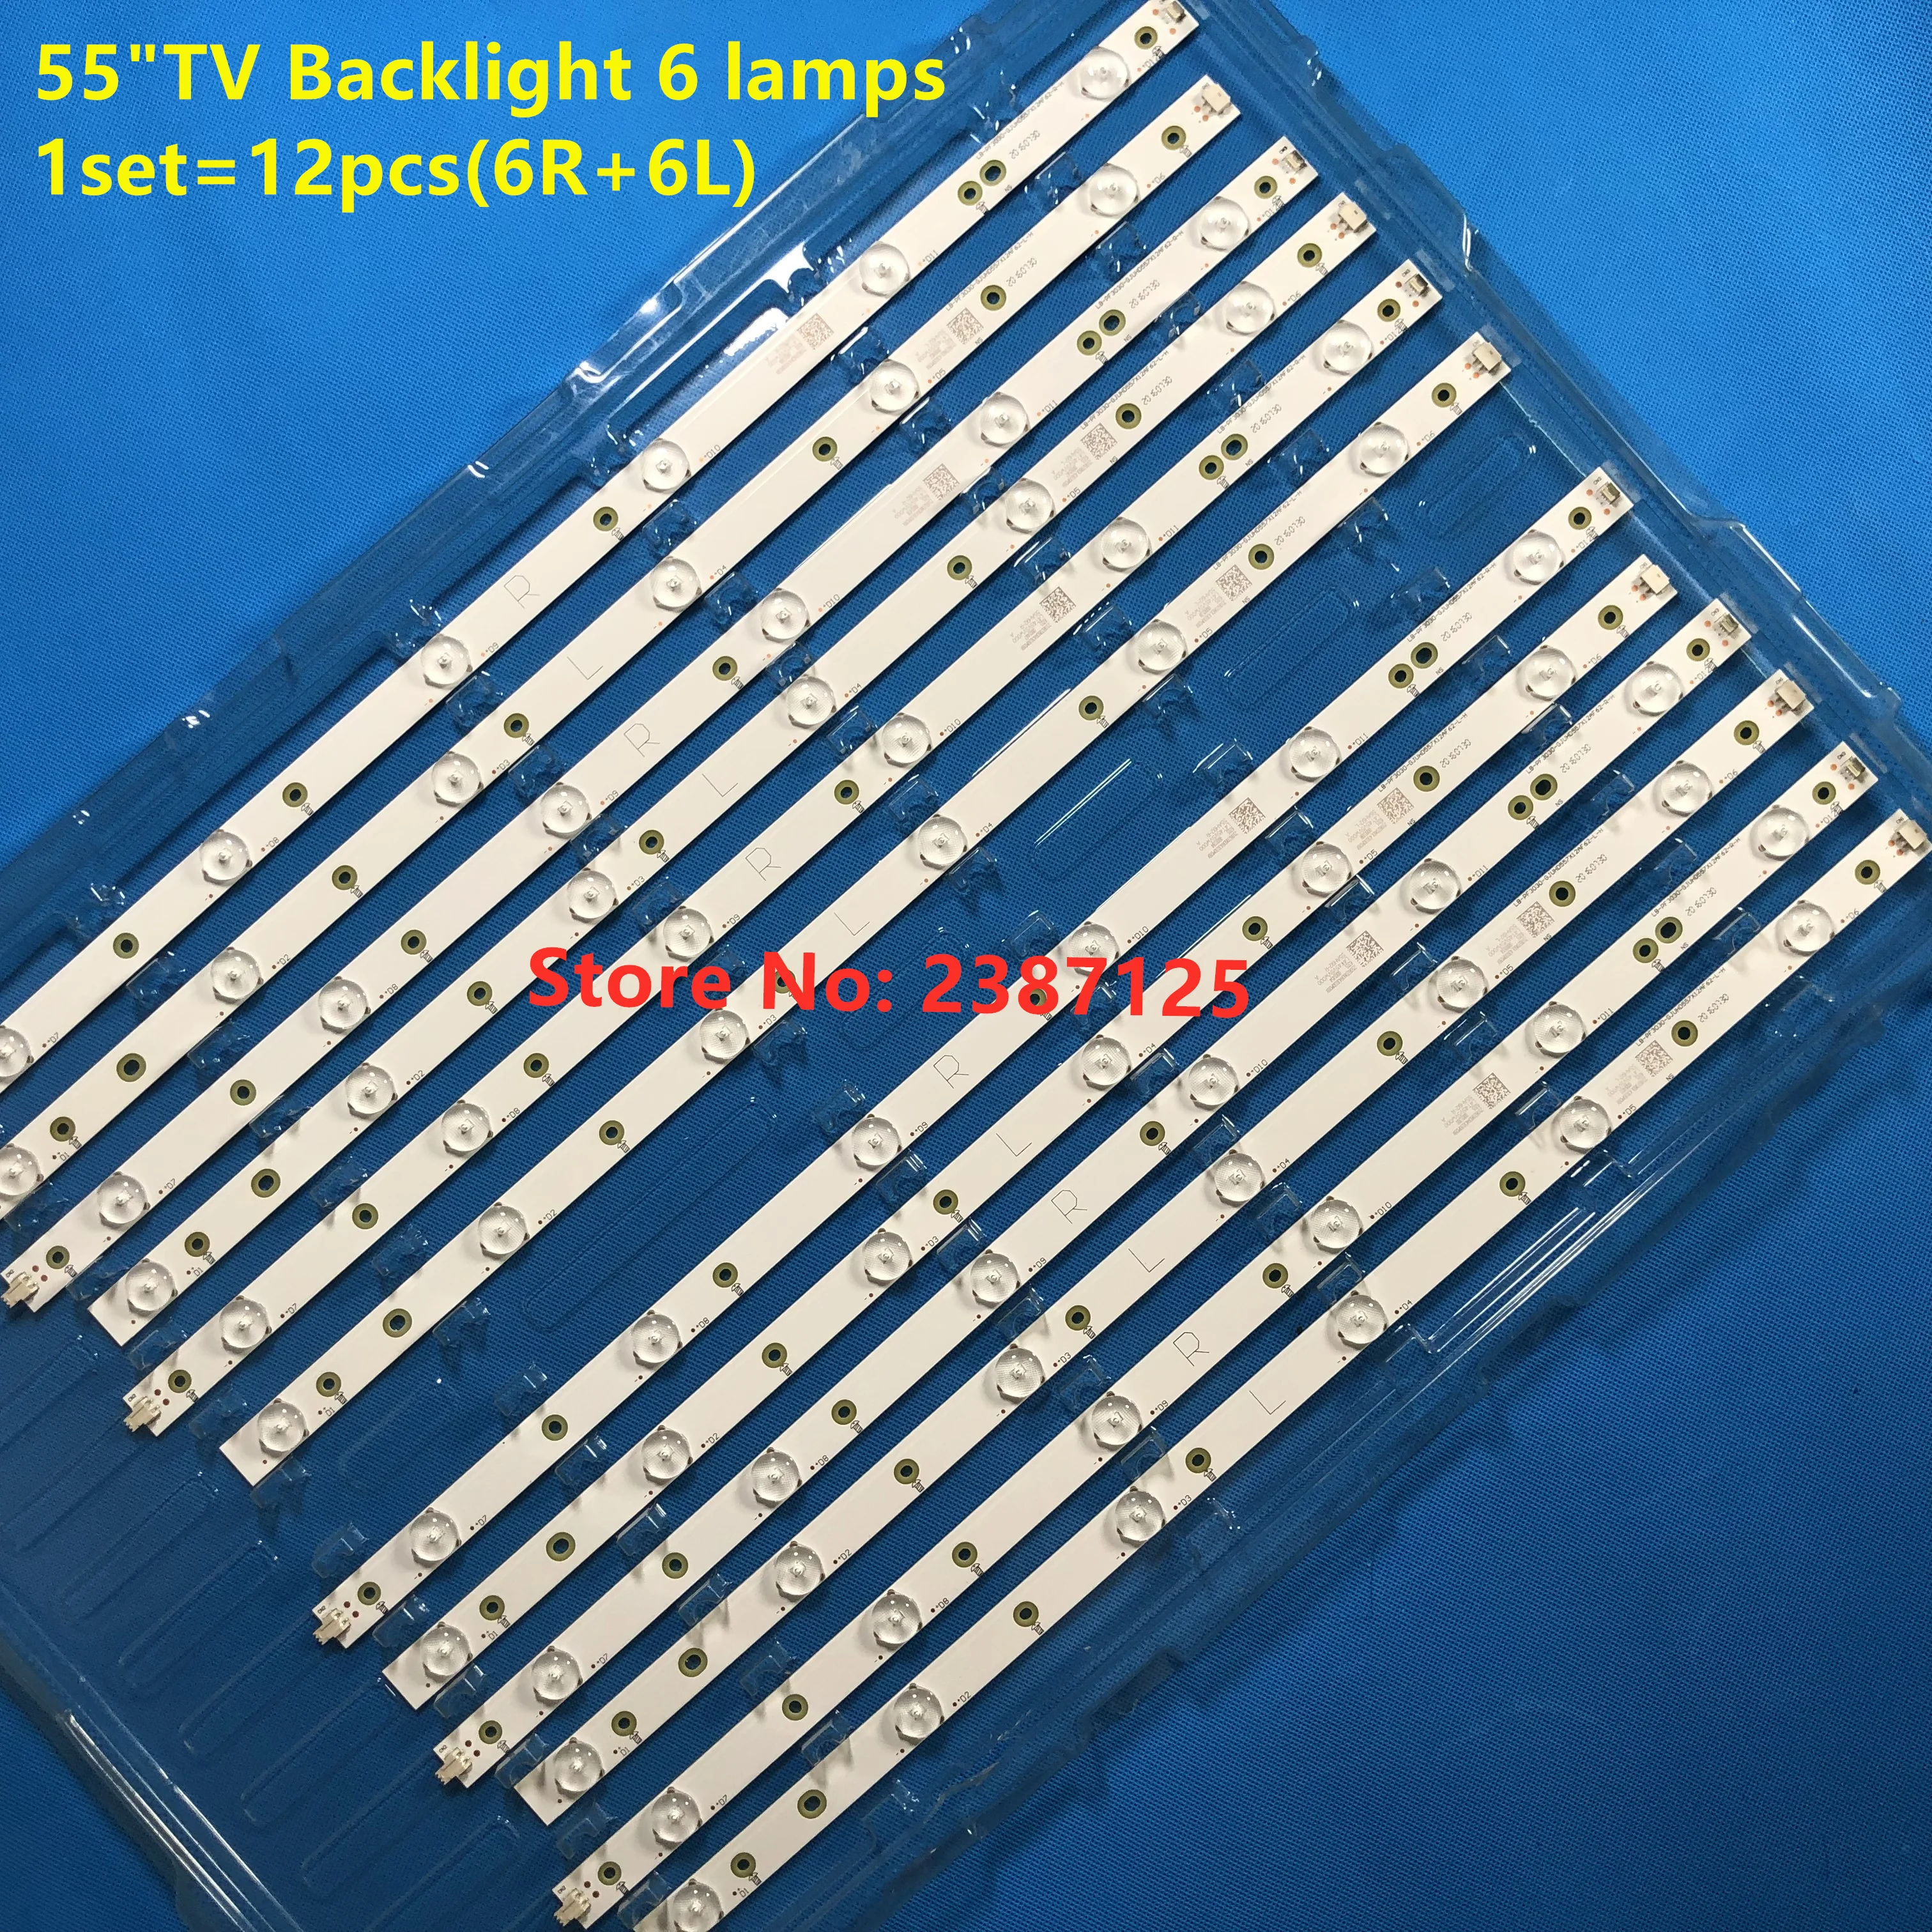 

LED Backlight For Ph ilips 55" TV LB55023 V1_02 55PFL6540 55PFL5449 55PFL3655/T3 55PFL6840/T3 55PFL6340/T3 YX-55023010-1A742